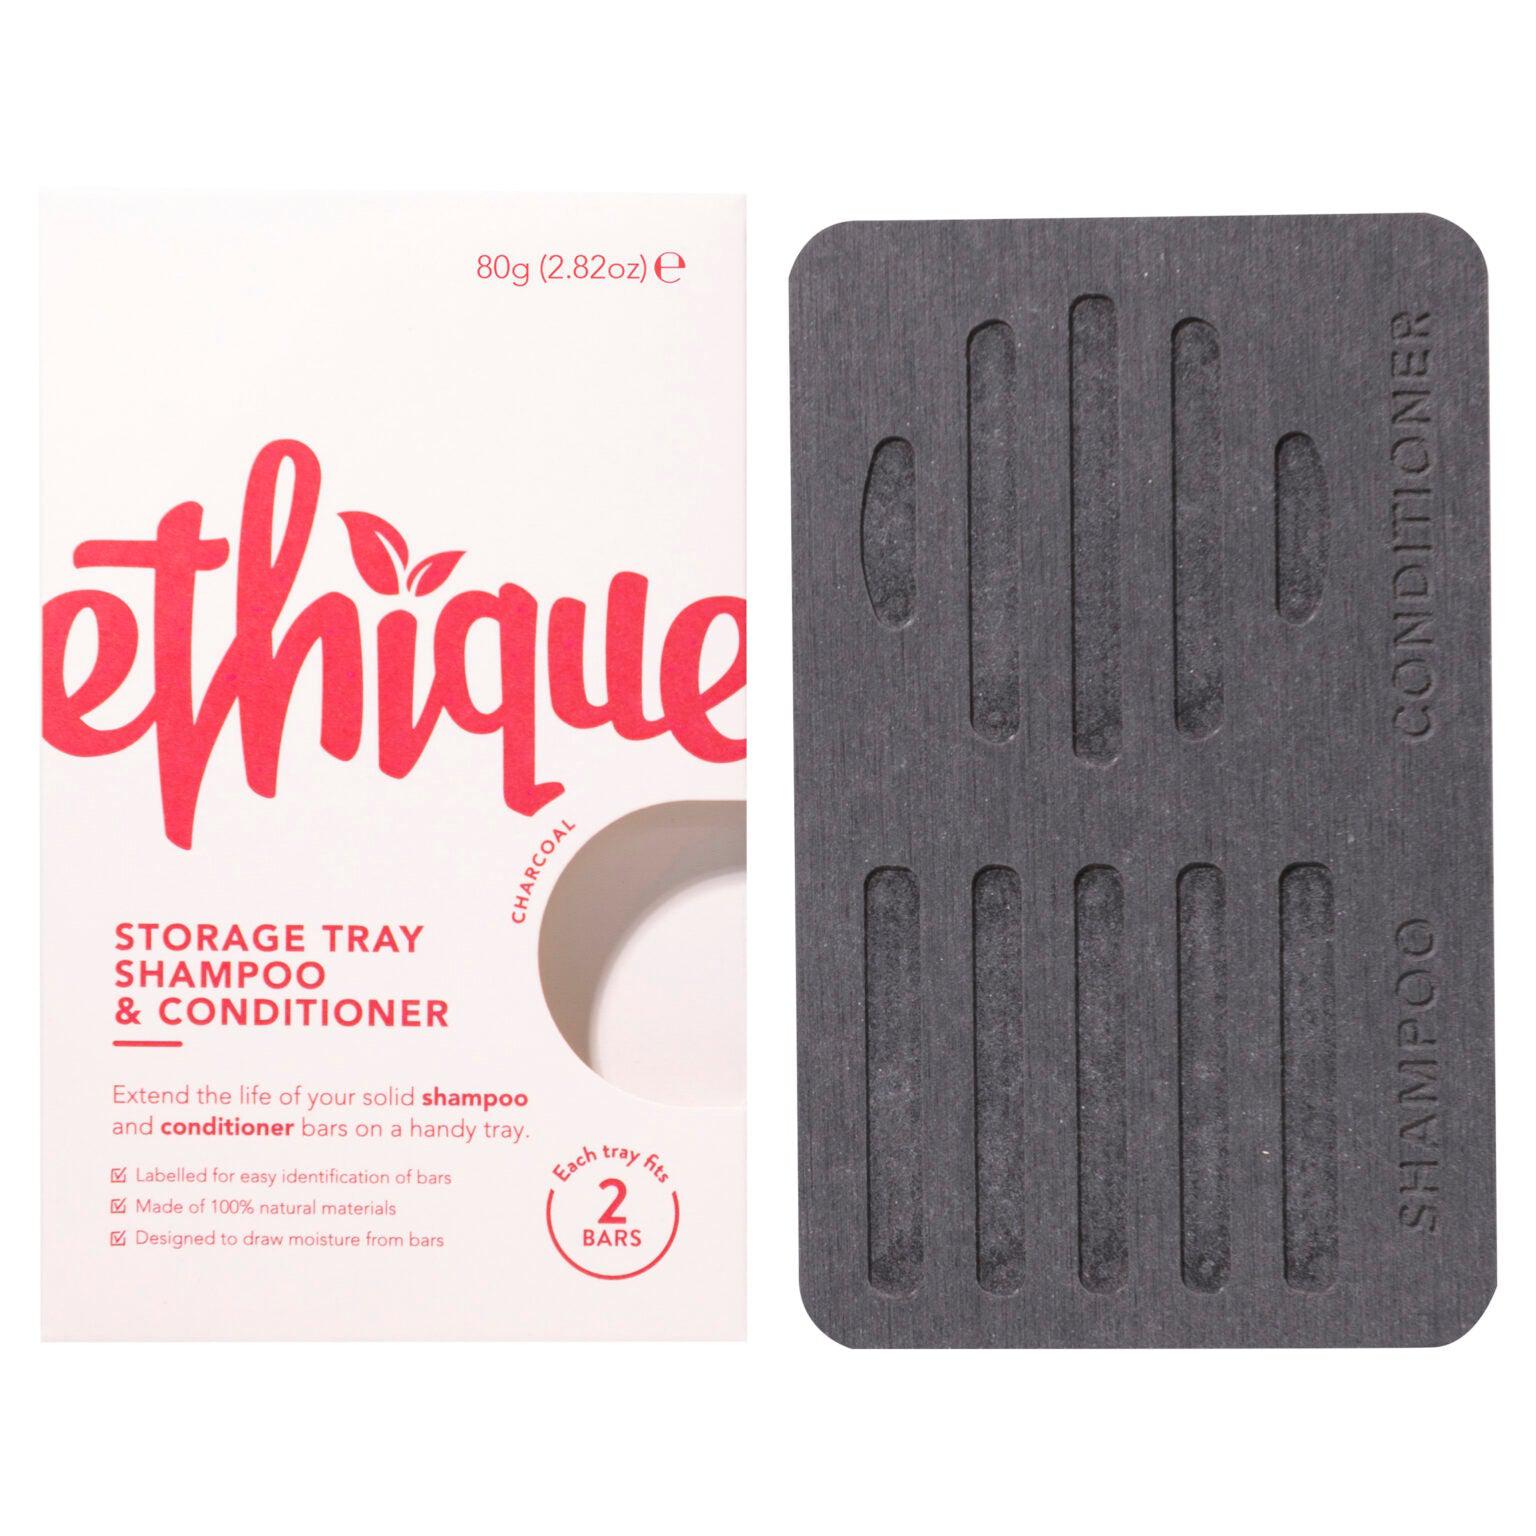 Ethique Storage Tray Hair